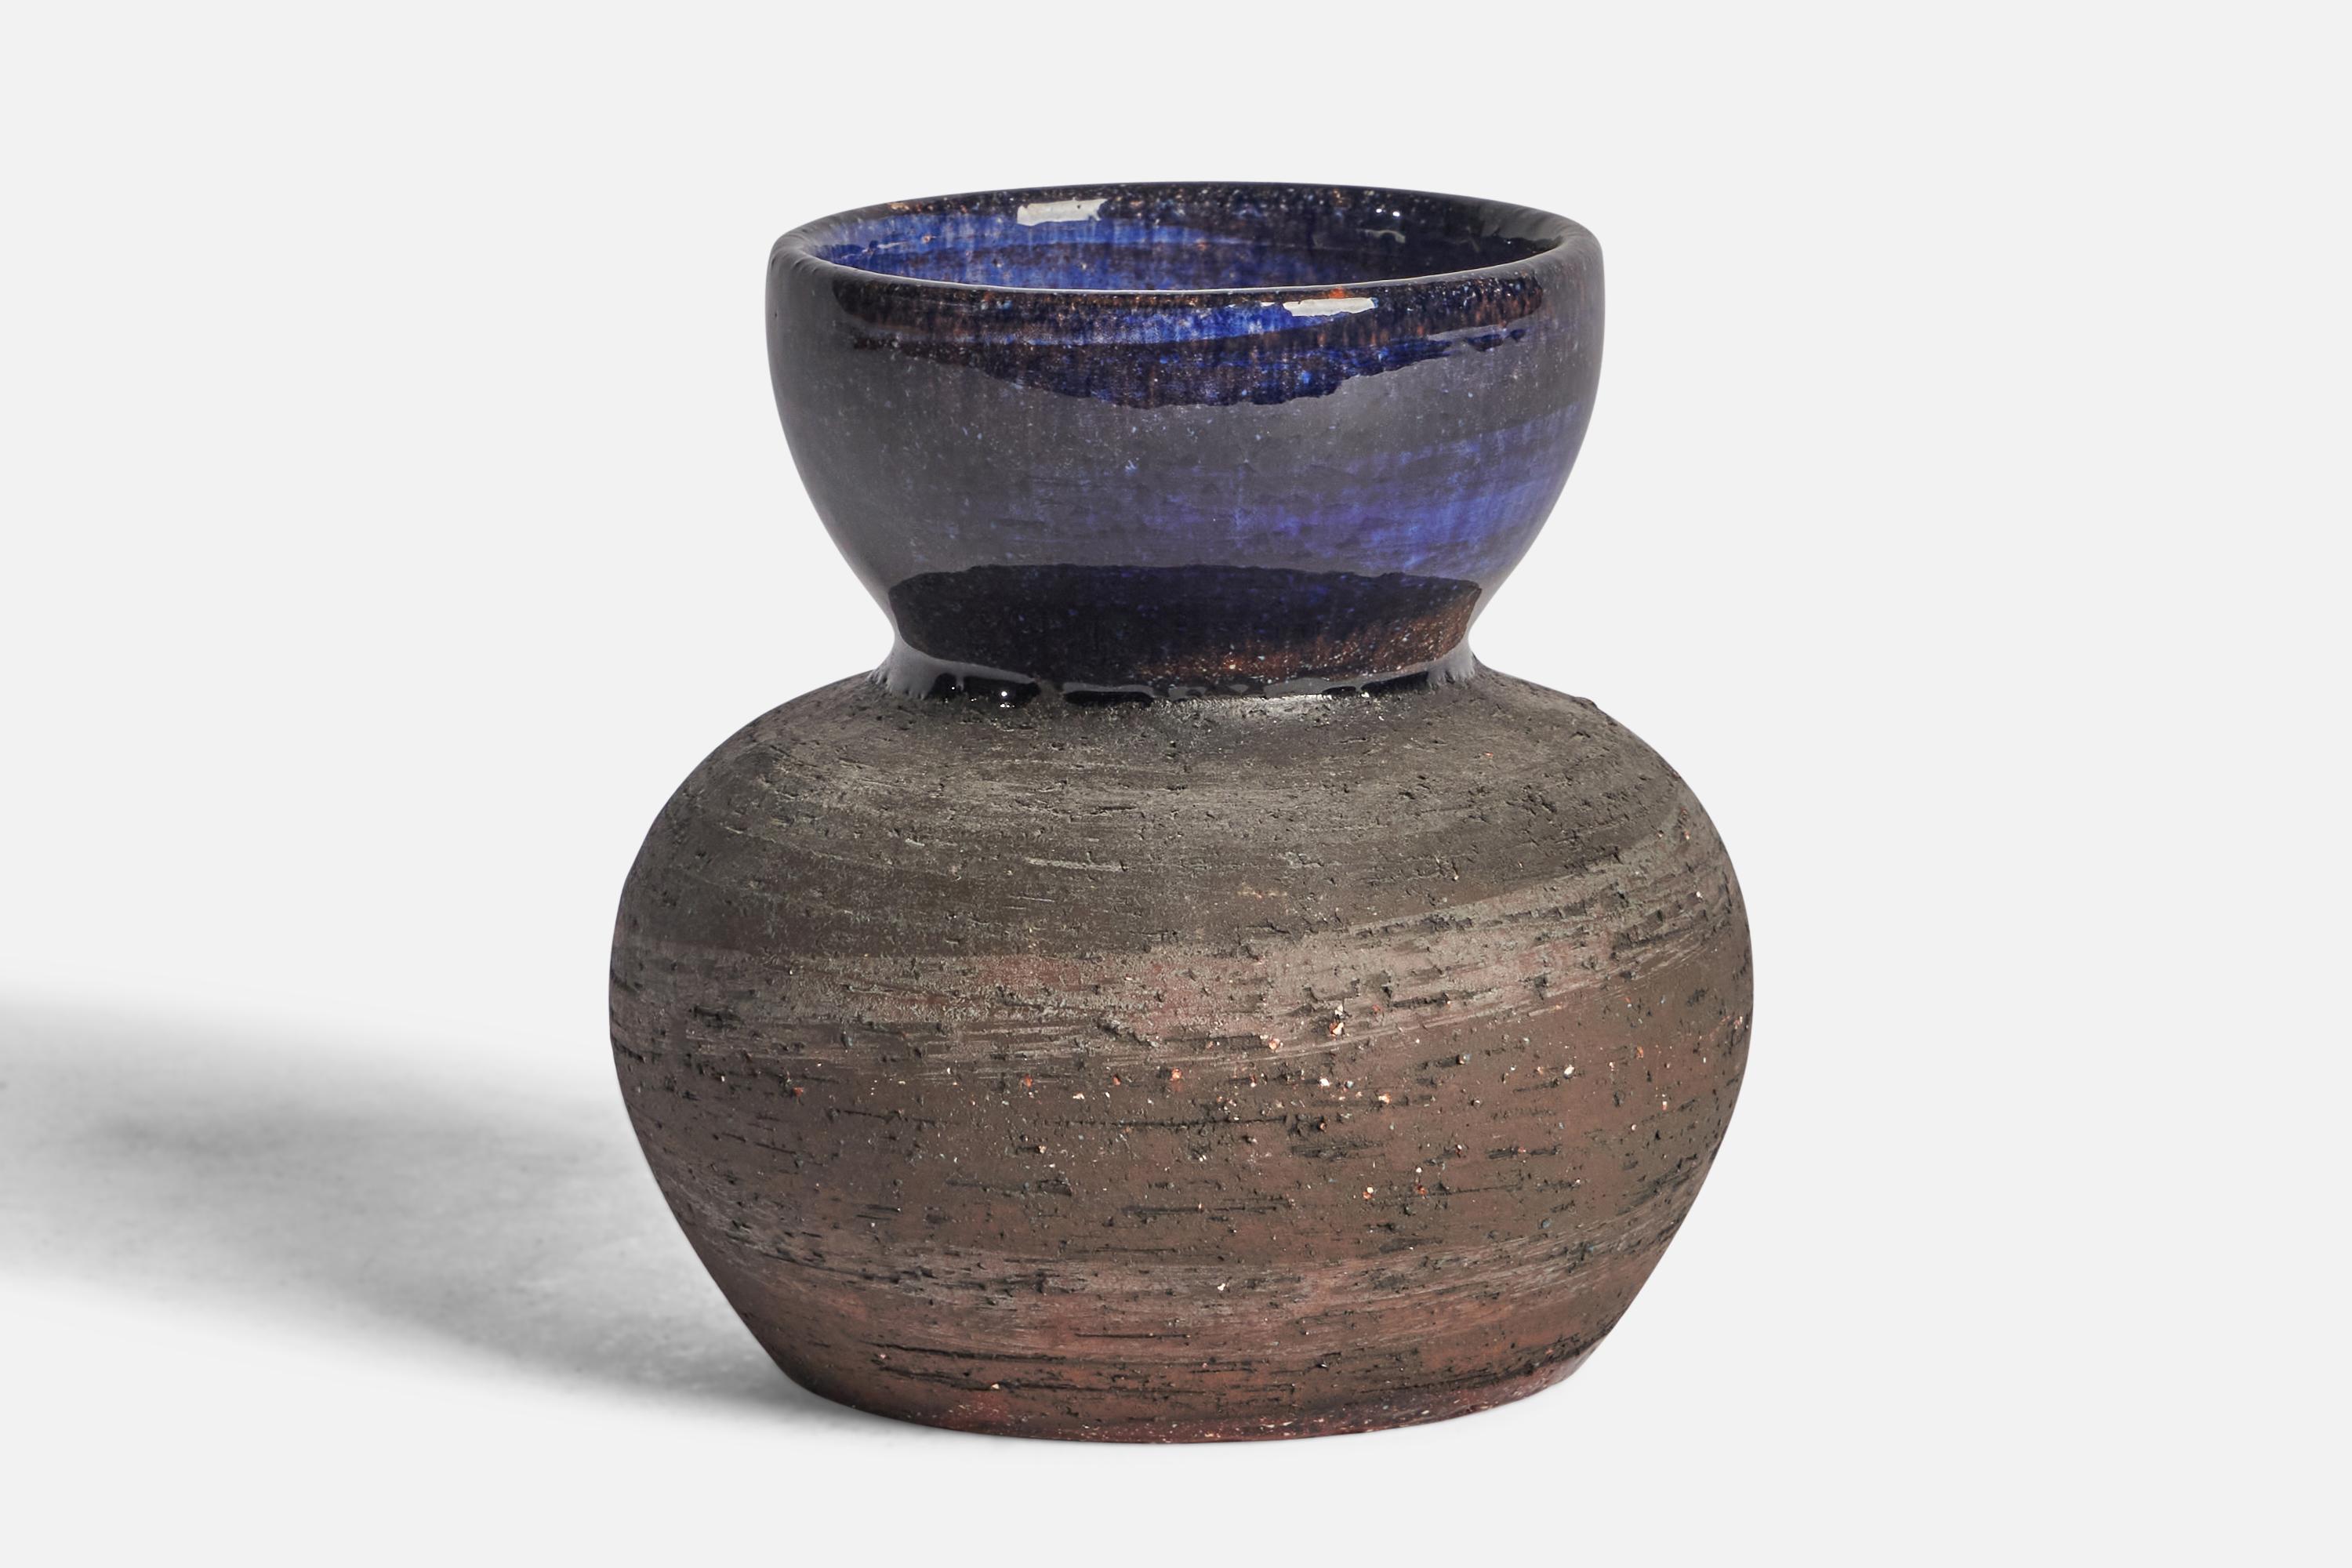 A blue and grey semi-glazed vase designed and produced by Gustav & Ulla Kraitz, Sweden, c. 1970s
“KRAITZ” written on bottom